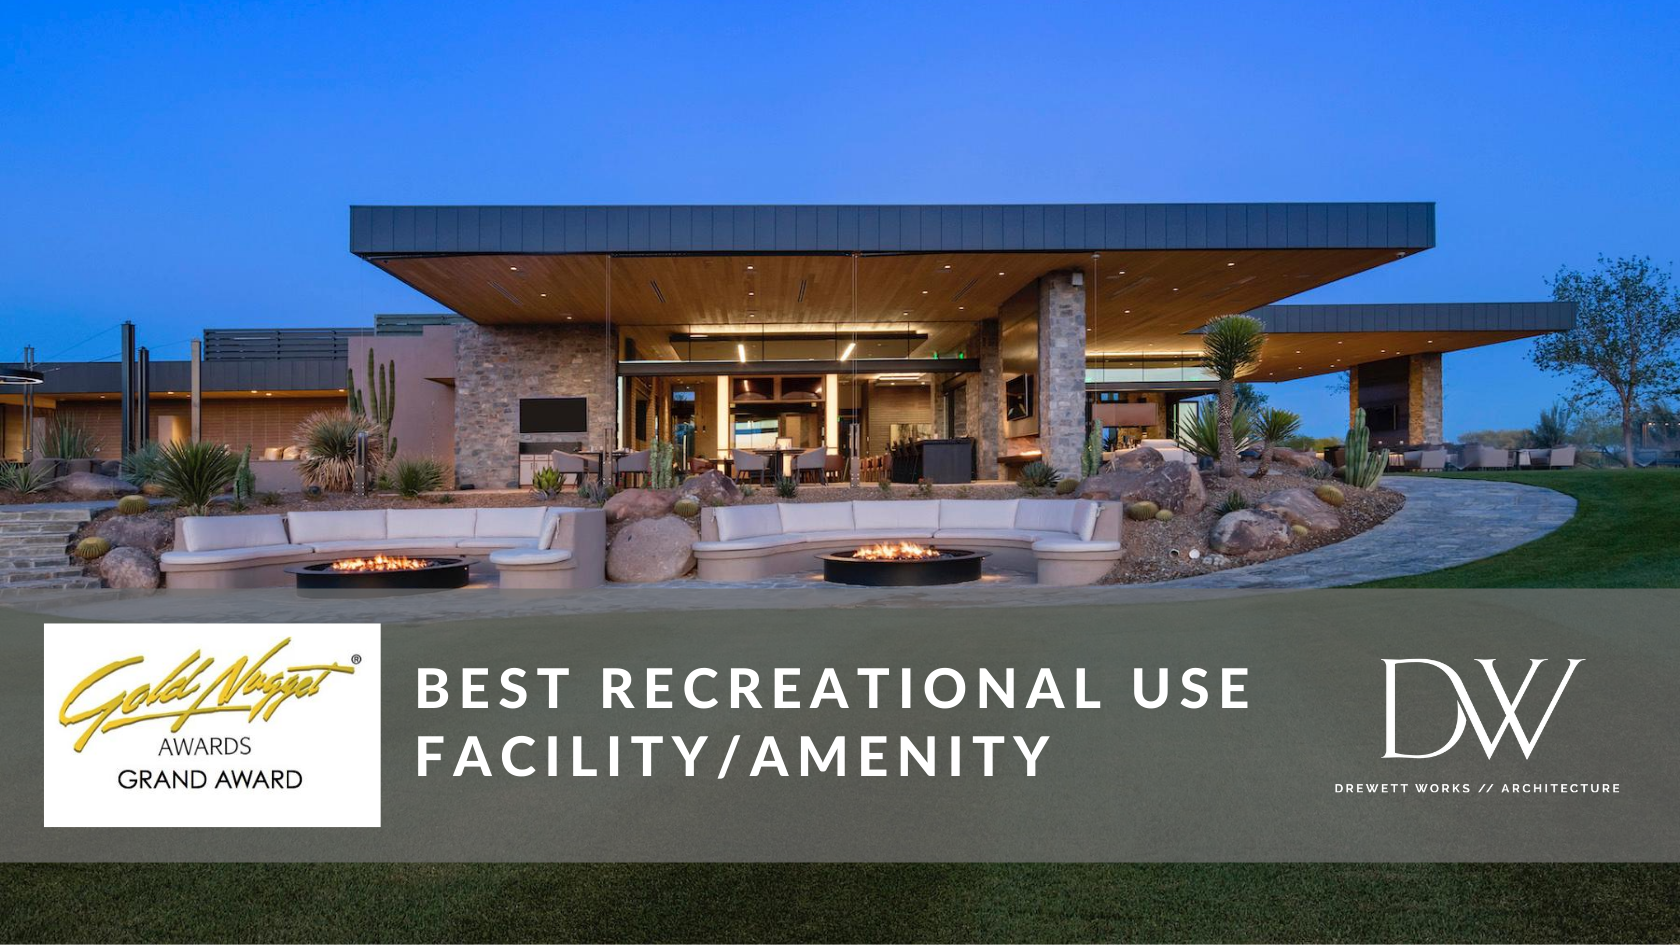 Seven Grand Award Best Recreational Use Facility Amenity